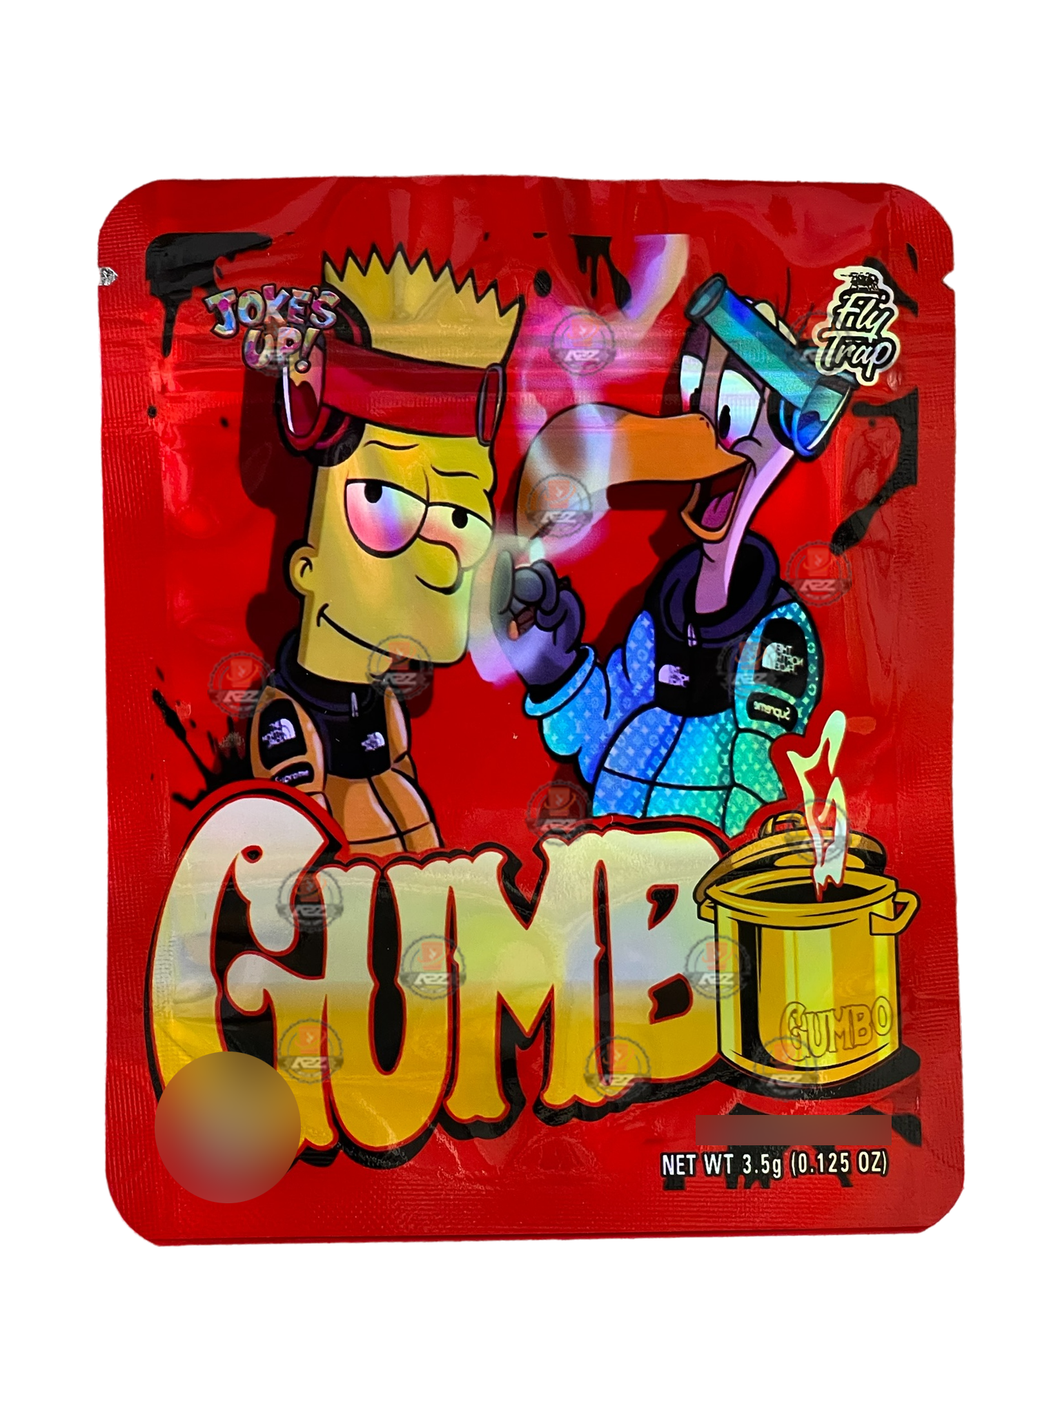 Simpson Gumbo 3.5g Mylar Bag Holographic Jokes Up Vulture Bros